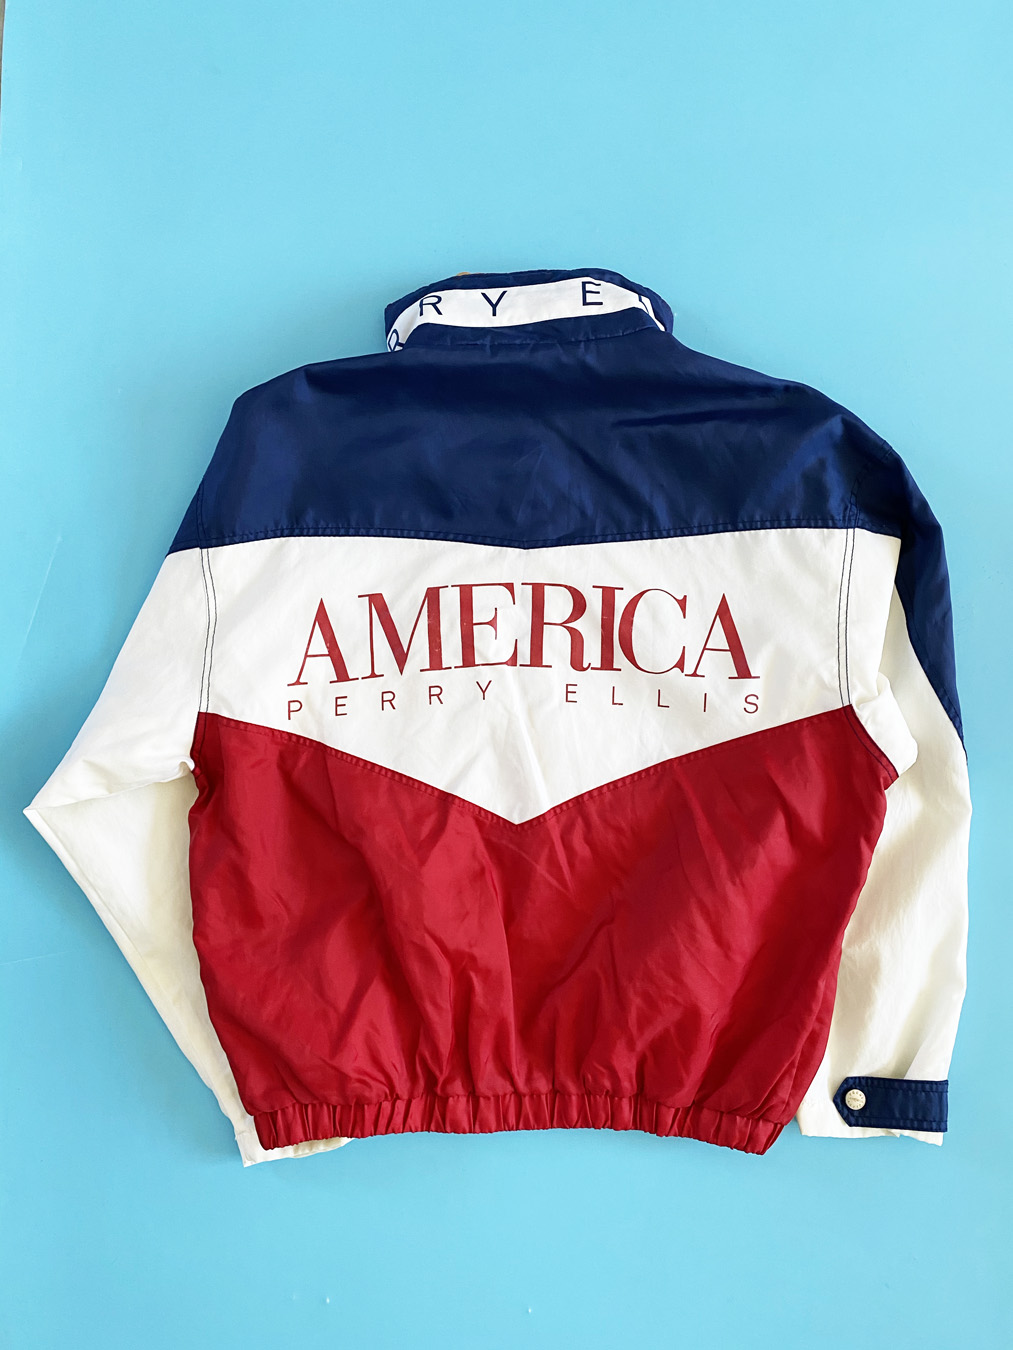 Perry Ellis | Jackets & Coats | Perry Ellis America Mens Jacket Full Front  Zipper Standup Collar | Poshmark